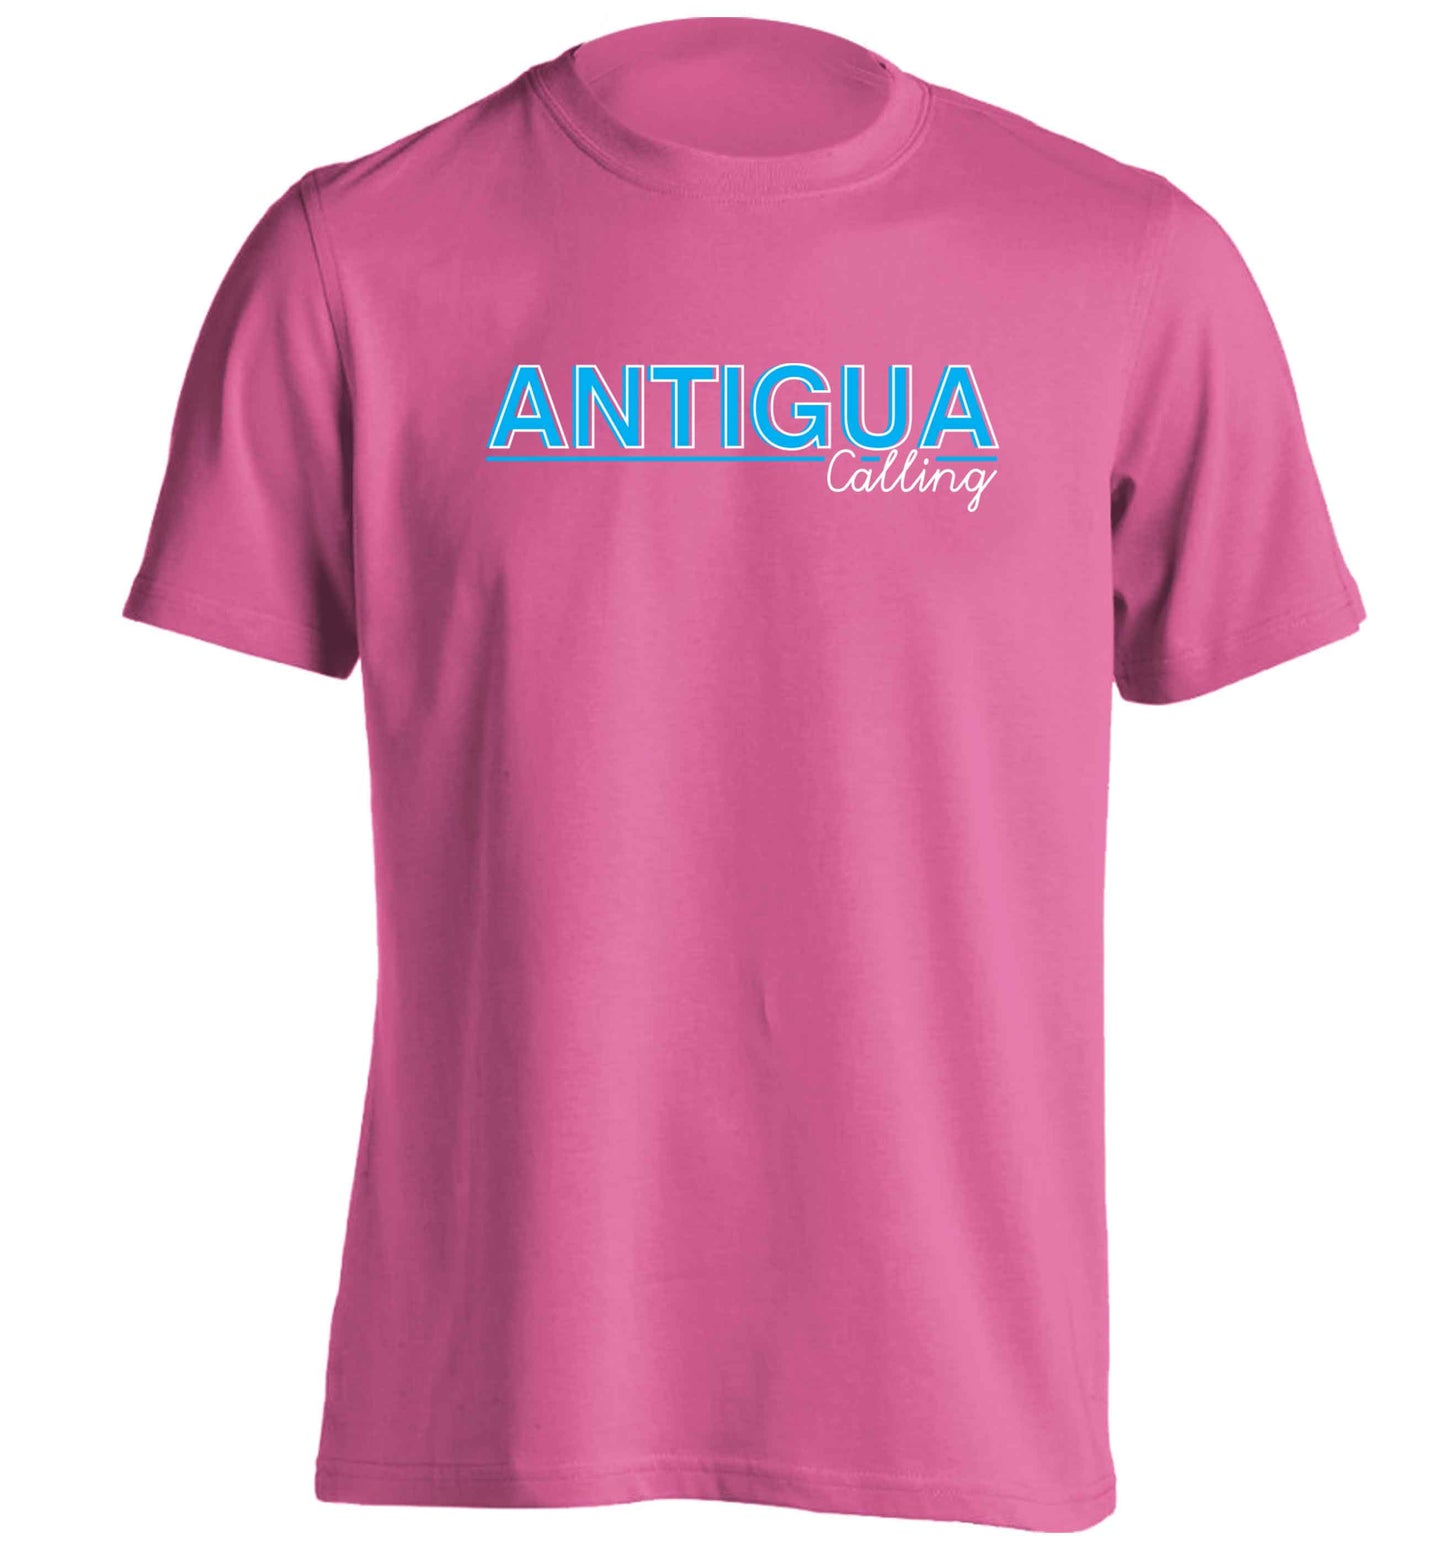 Antigua calling adults unisex pink Tshirt 2XL